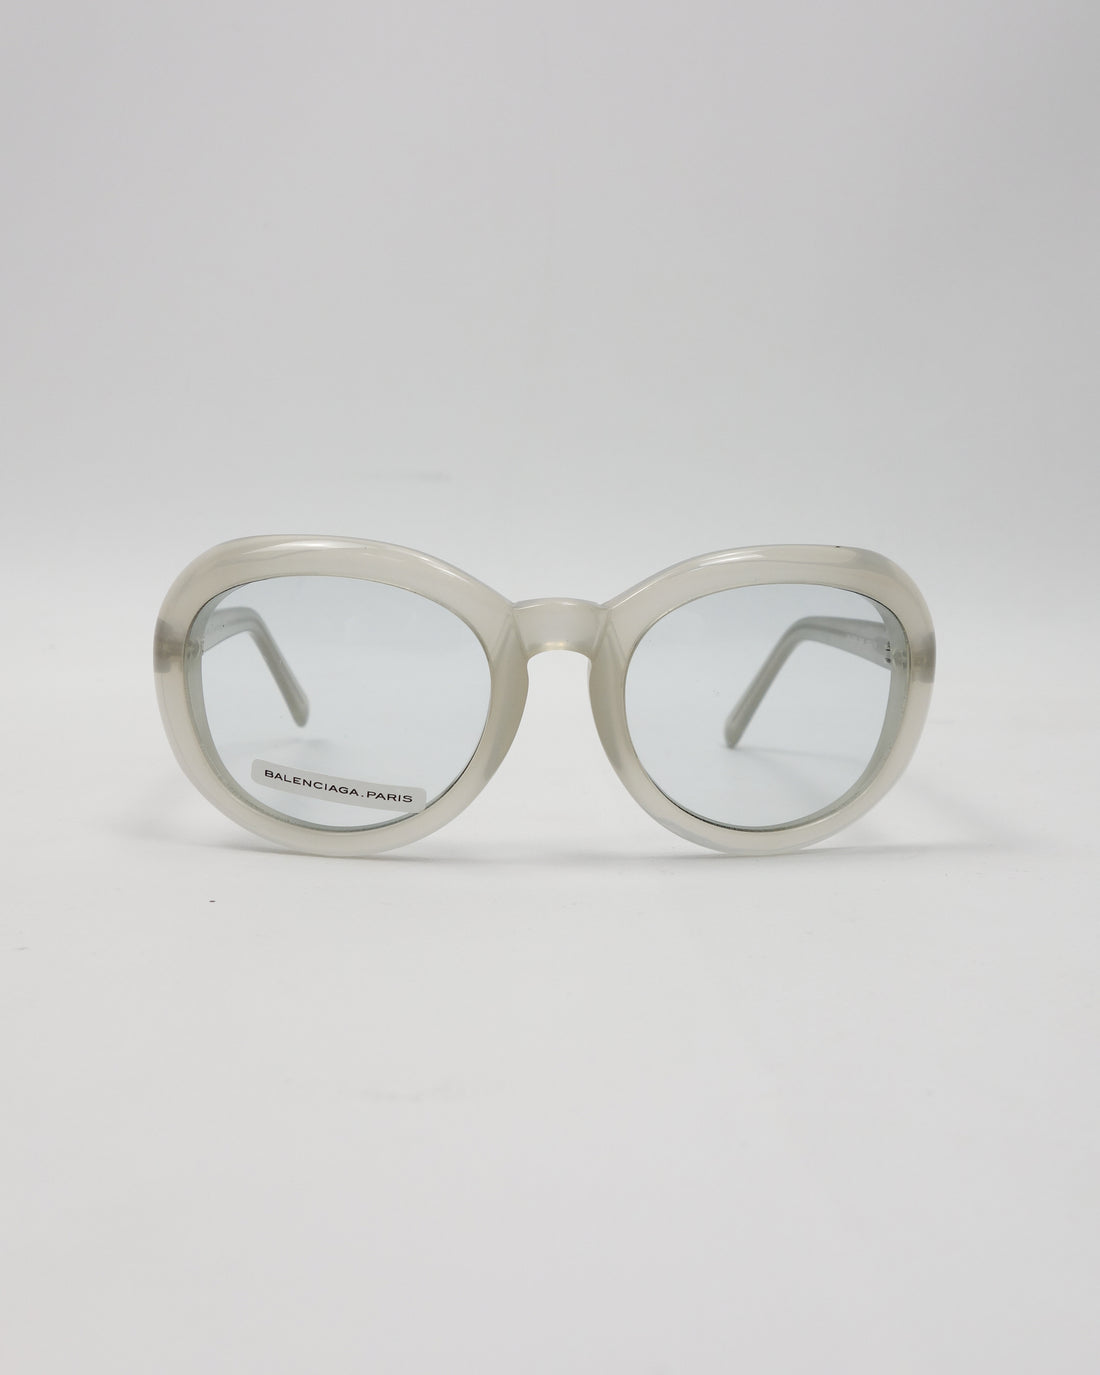 Balenciaga Transparent Glasses 2000's